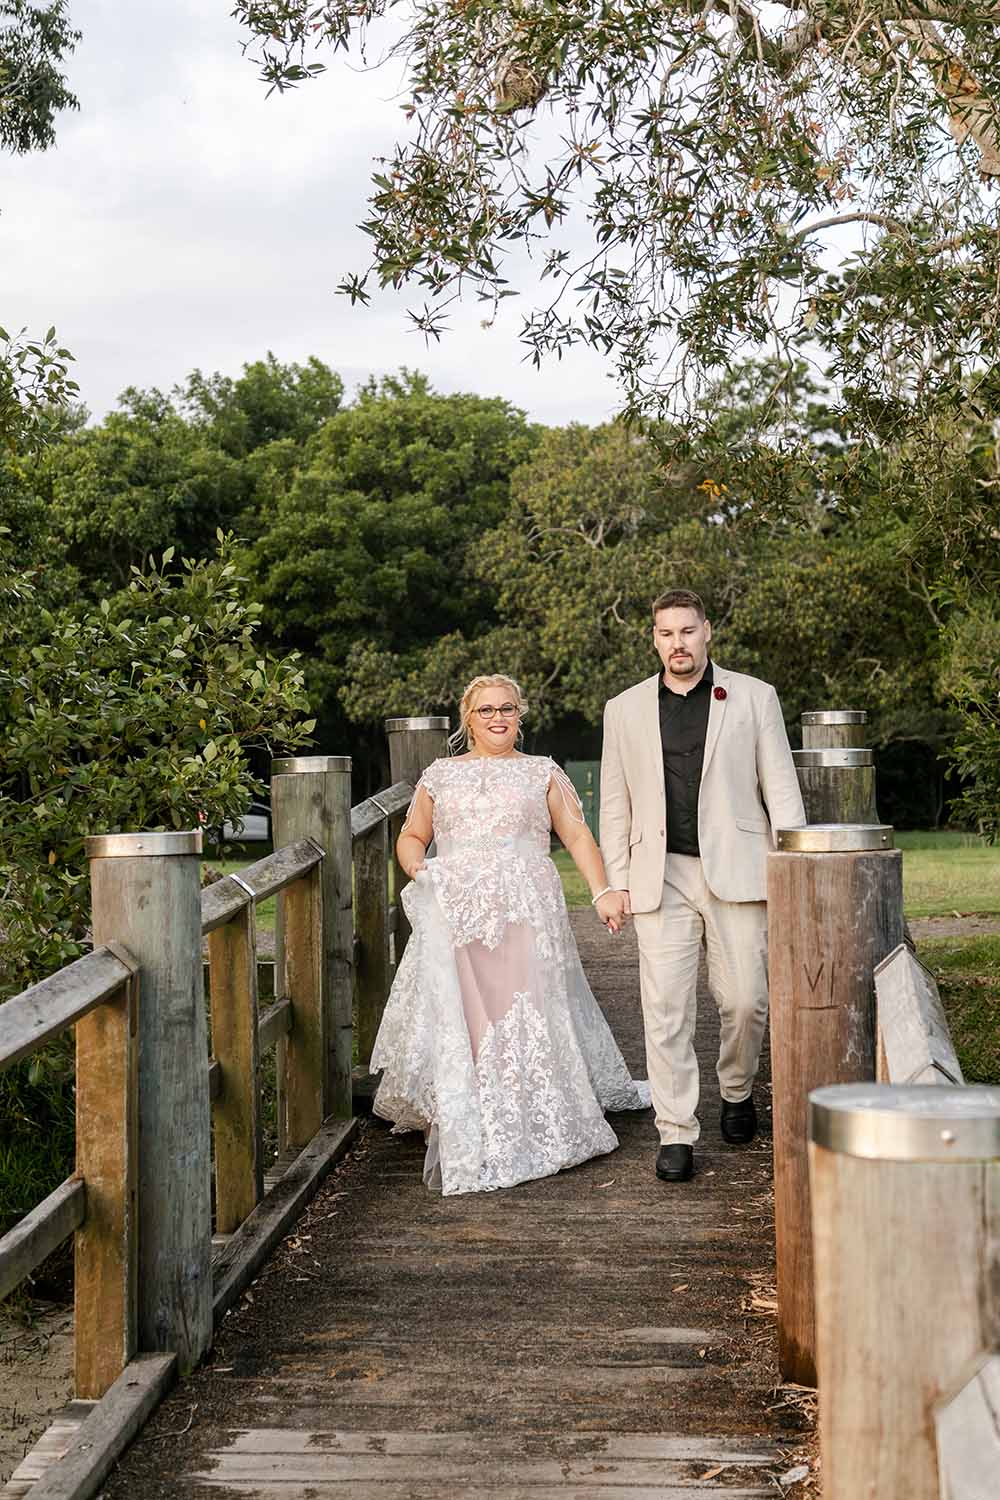 Destination Wedding Photography - bride and groom walking